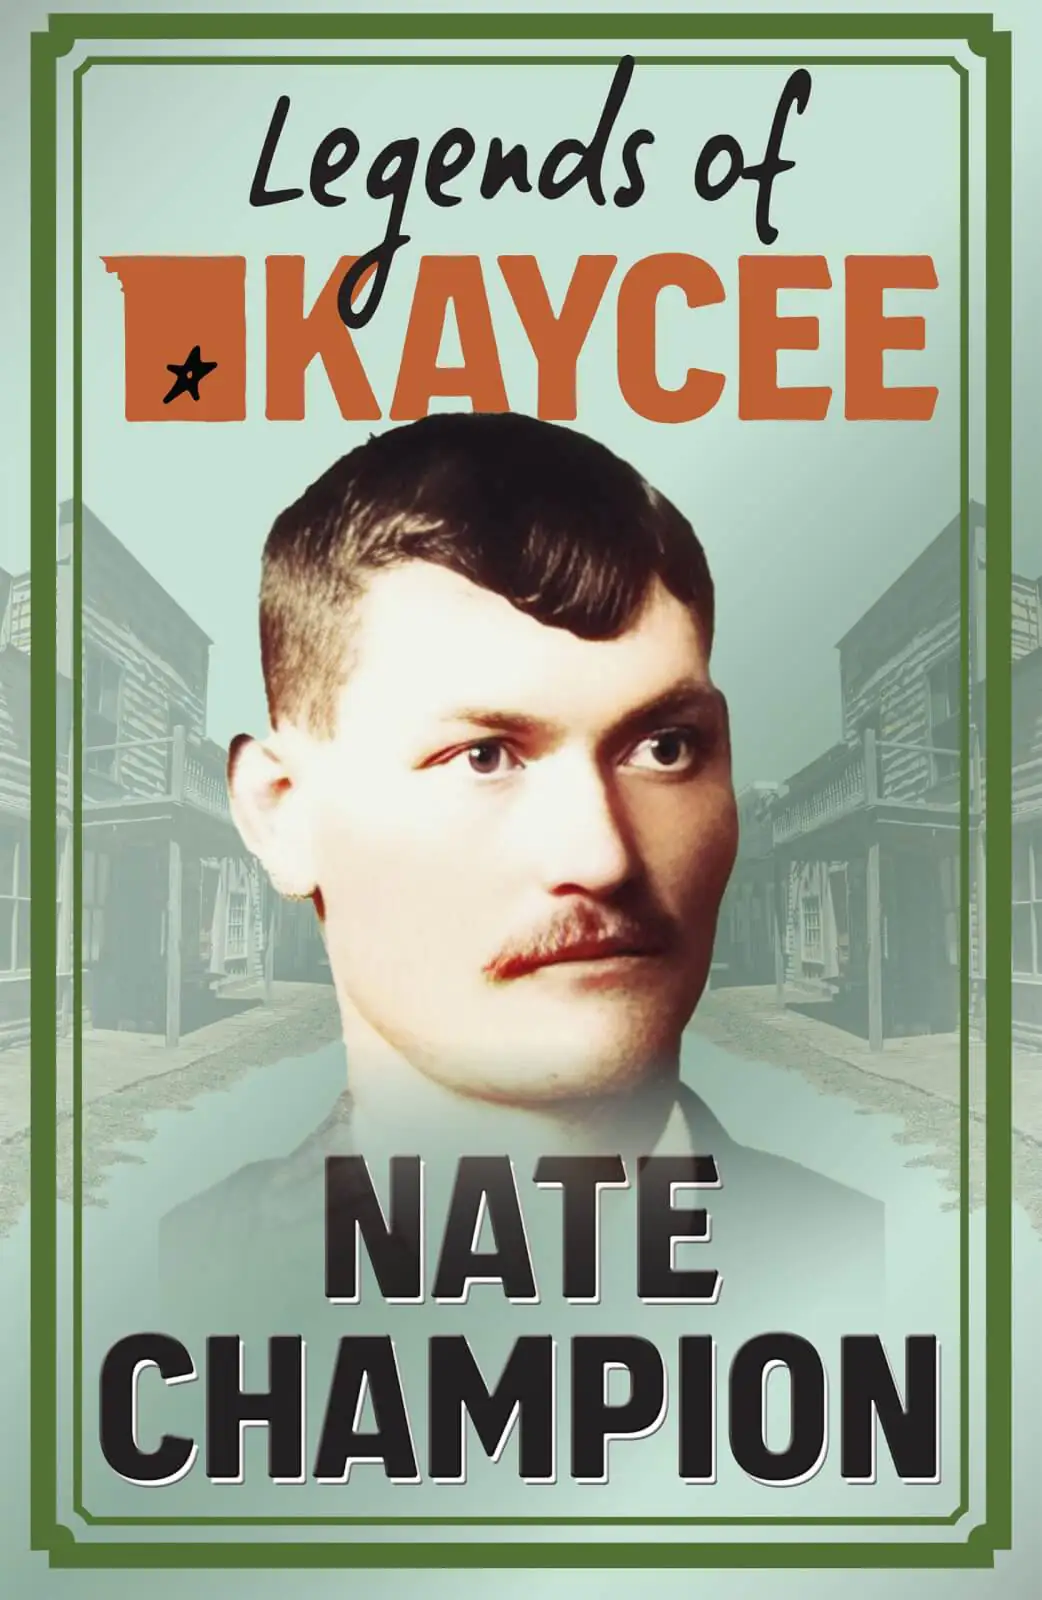 Legends of Kaycee